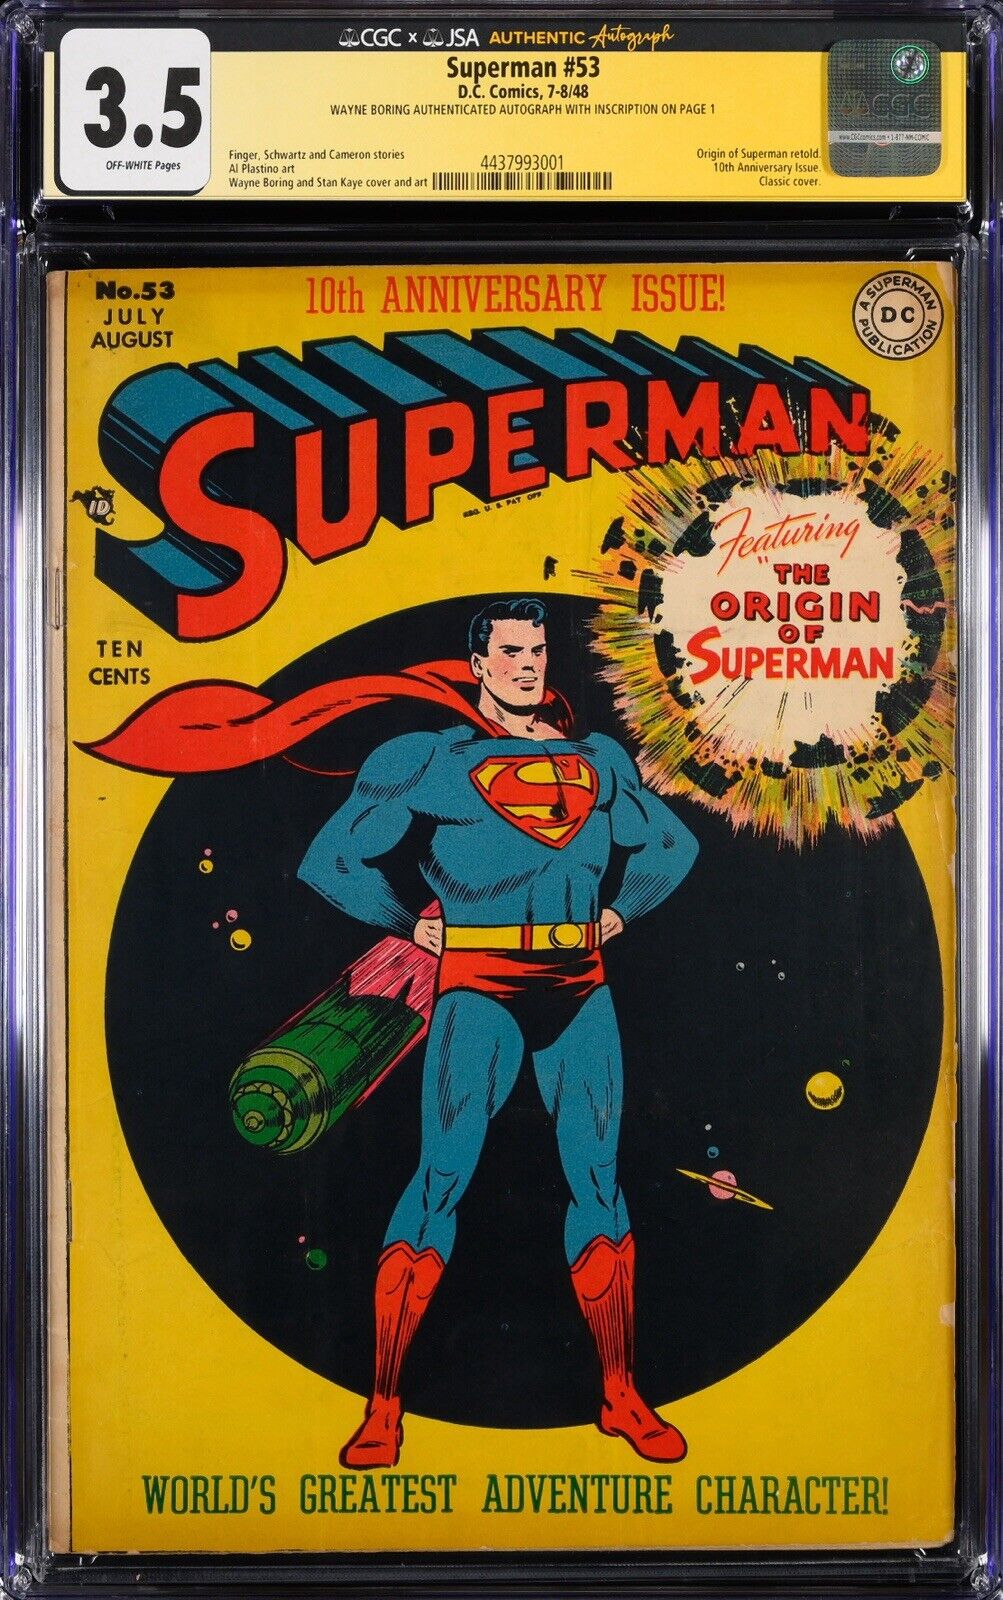 SUPERMAN #53 (1948) SIGNED WAYNE BORING 1/1? CGCxJSA 3.5